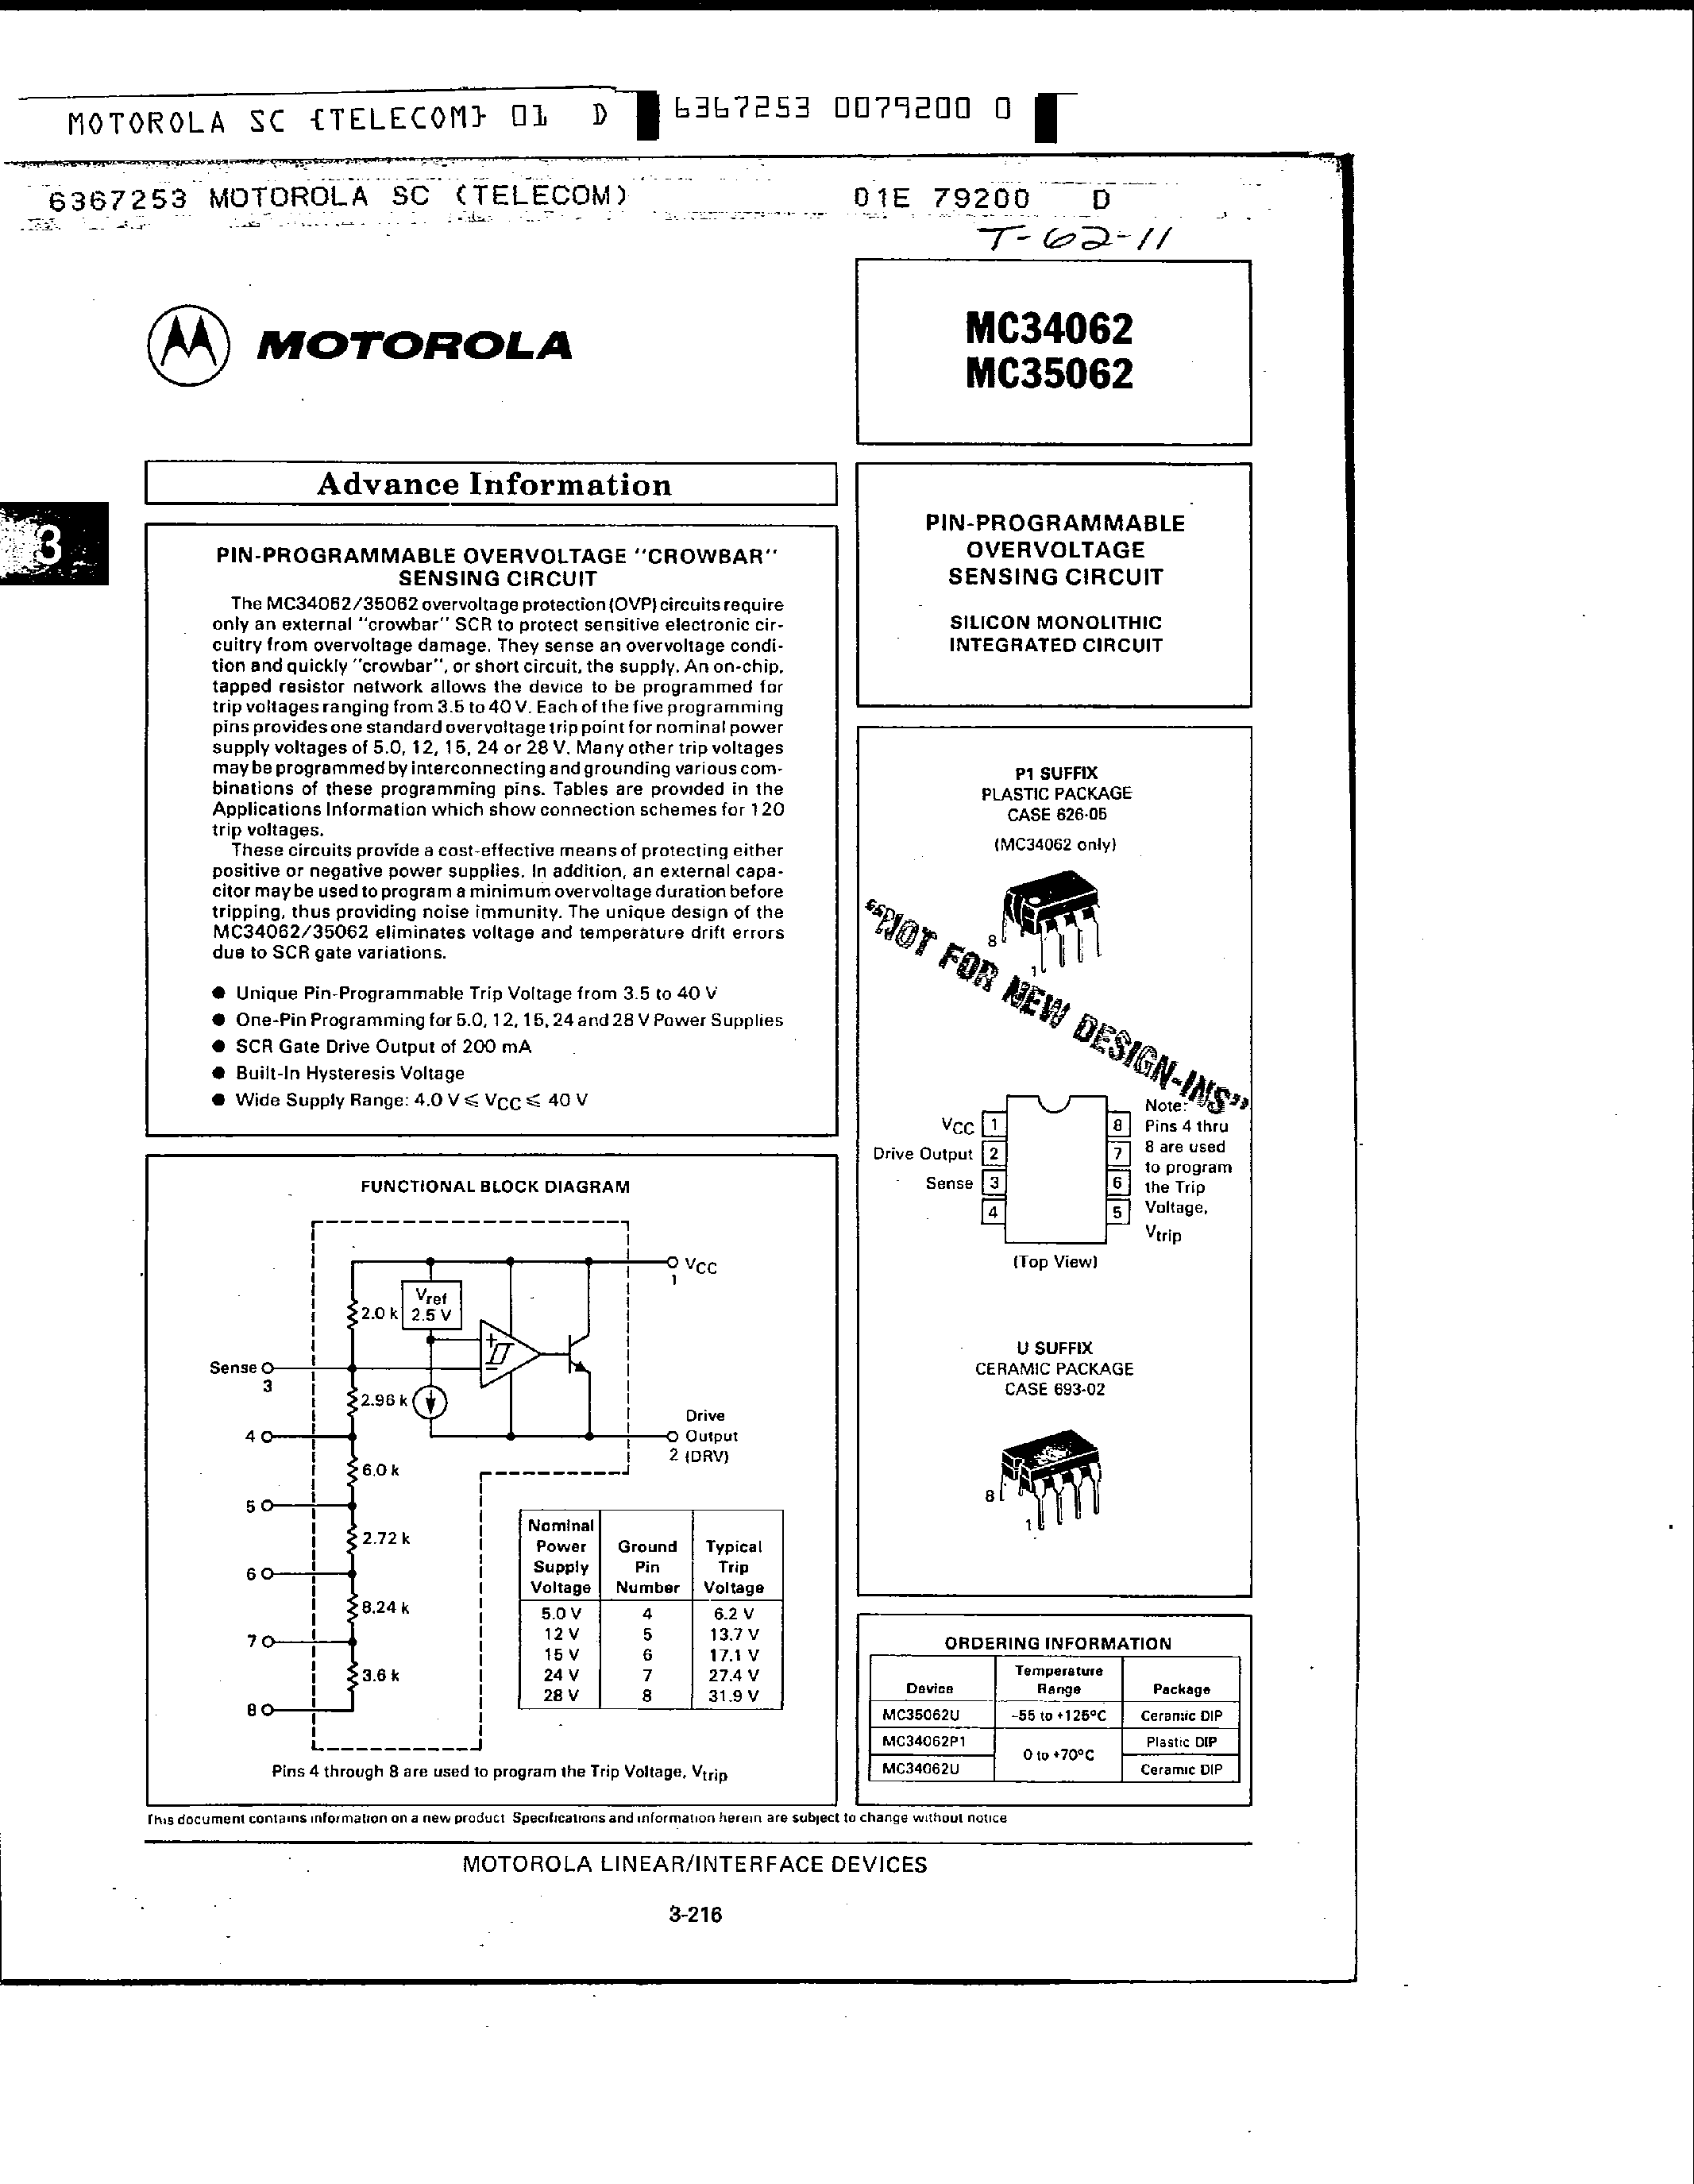 Datasheet MC34062 - Pin-Programmable Overvoltage Sensing Circuit page 1